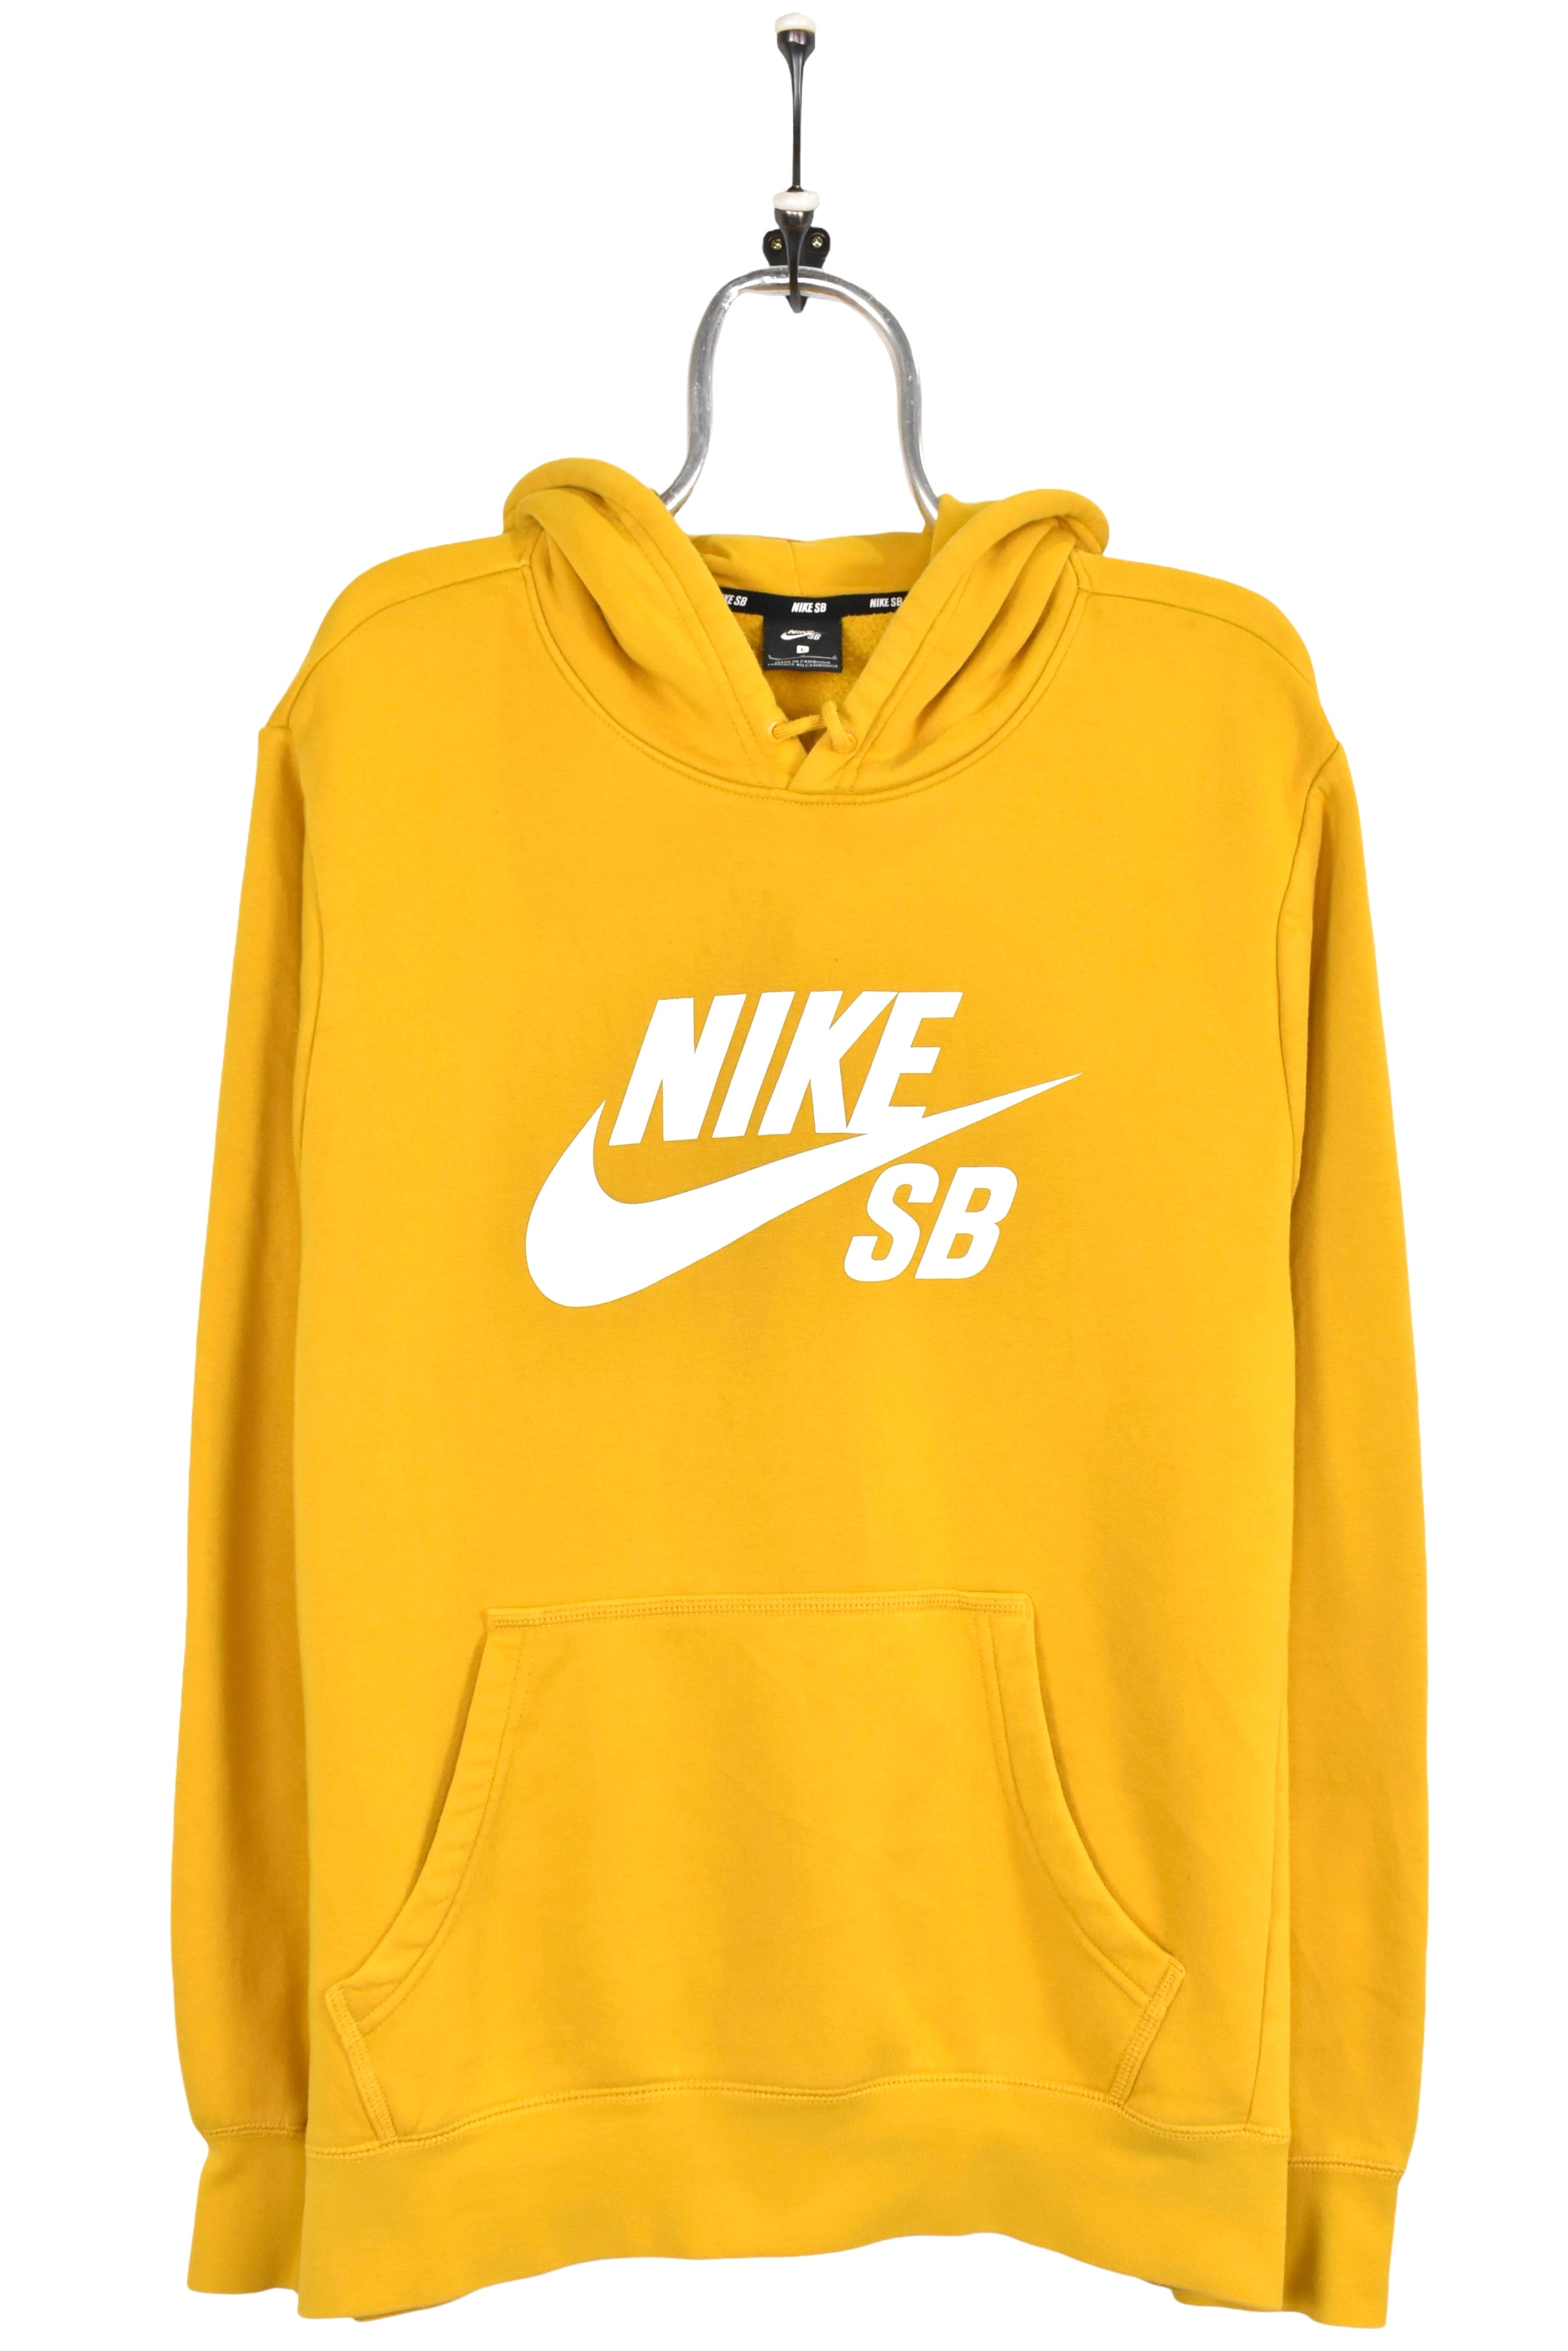 Vintage Nike hoodie, yellow graphic sweatshirt - AU Large NIKE